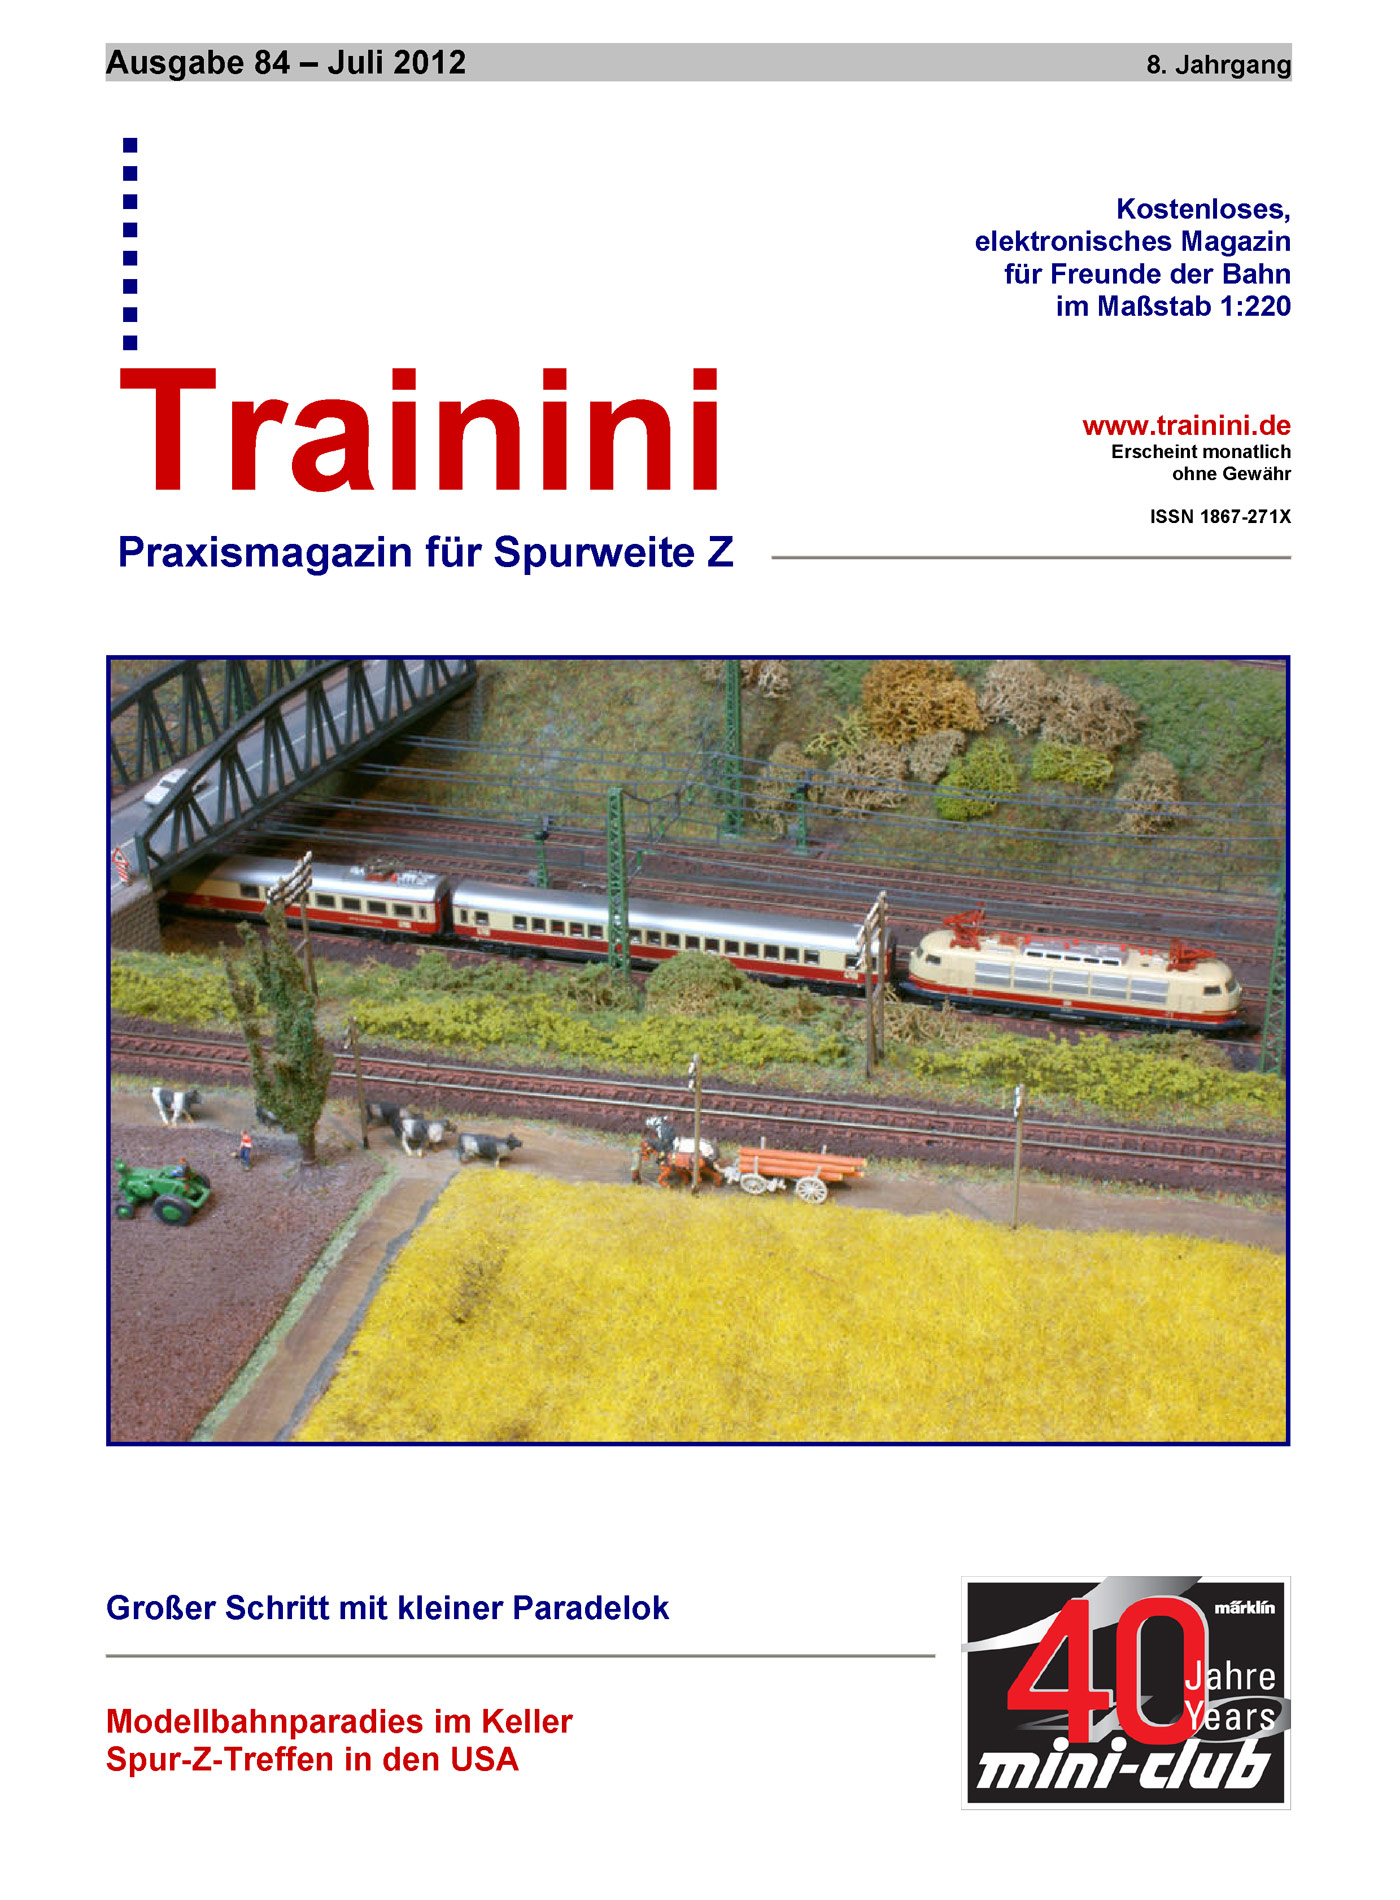 Trainini Ausgabe Juli 2012